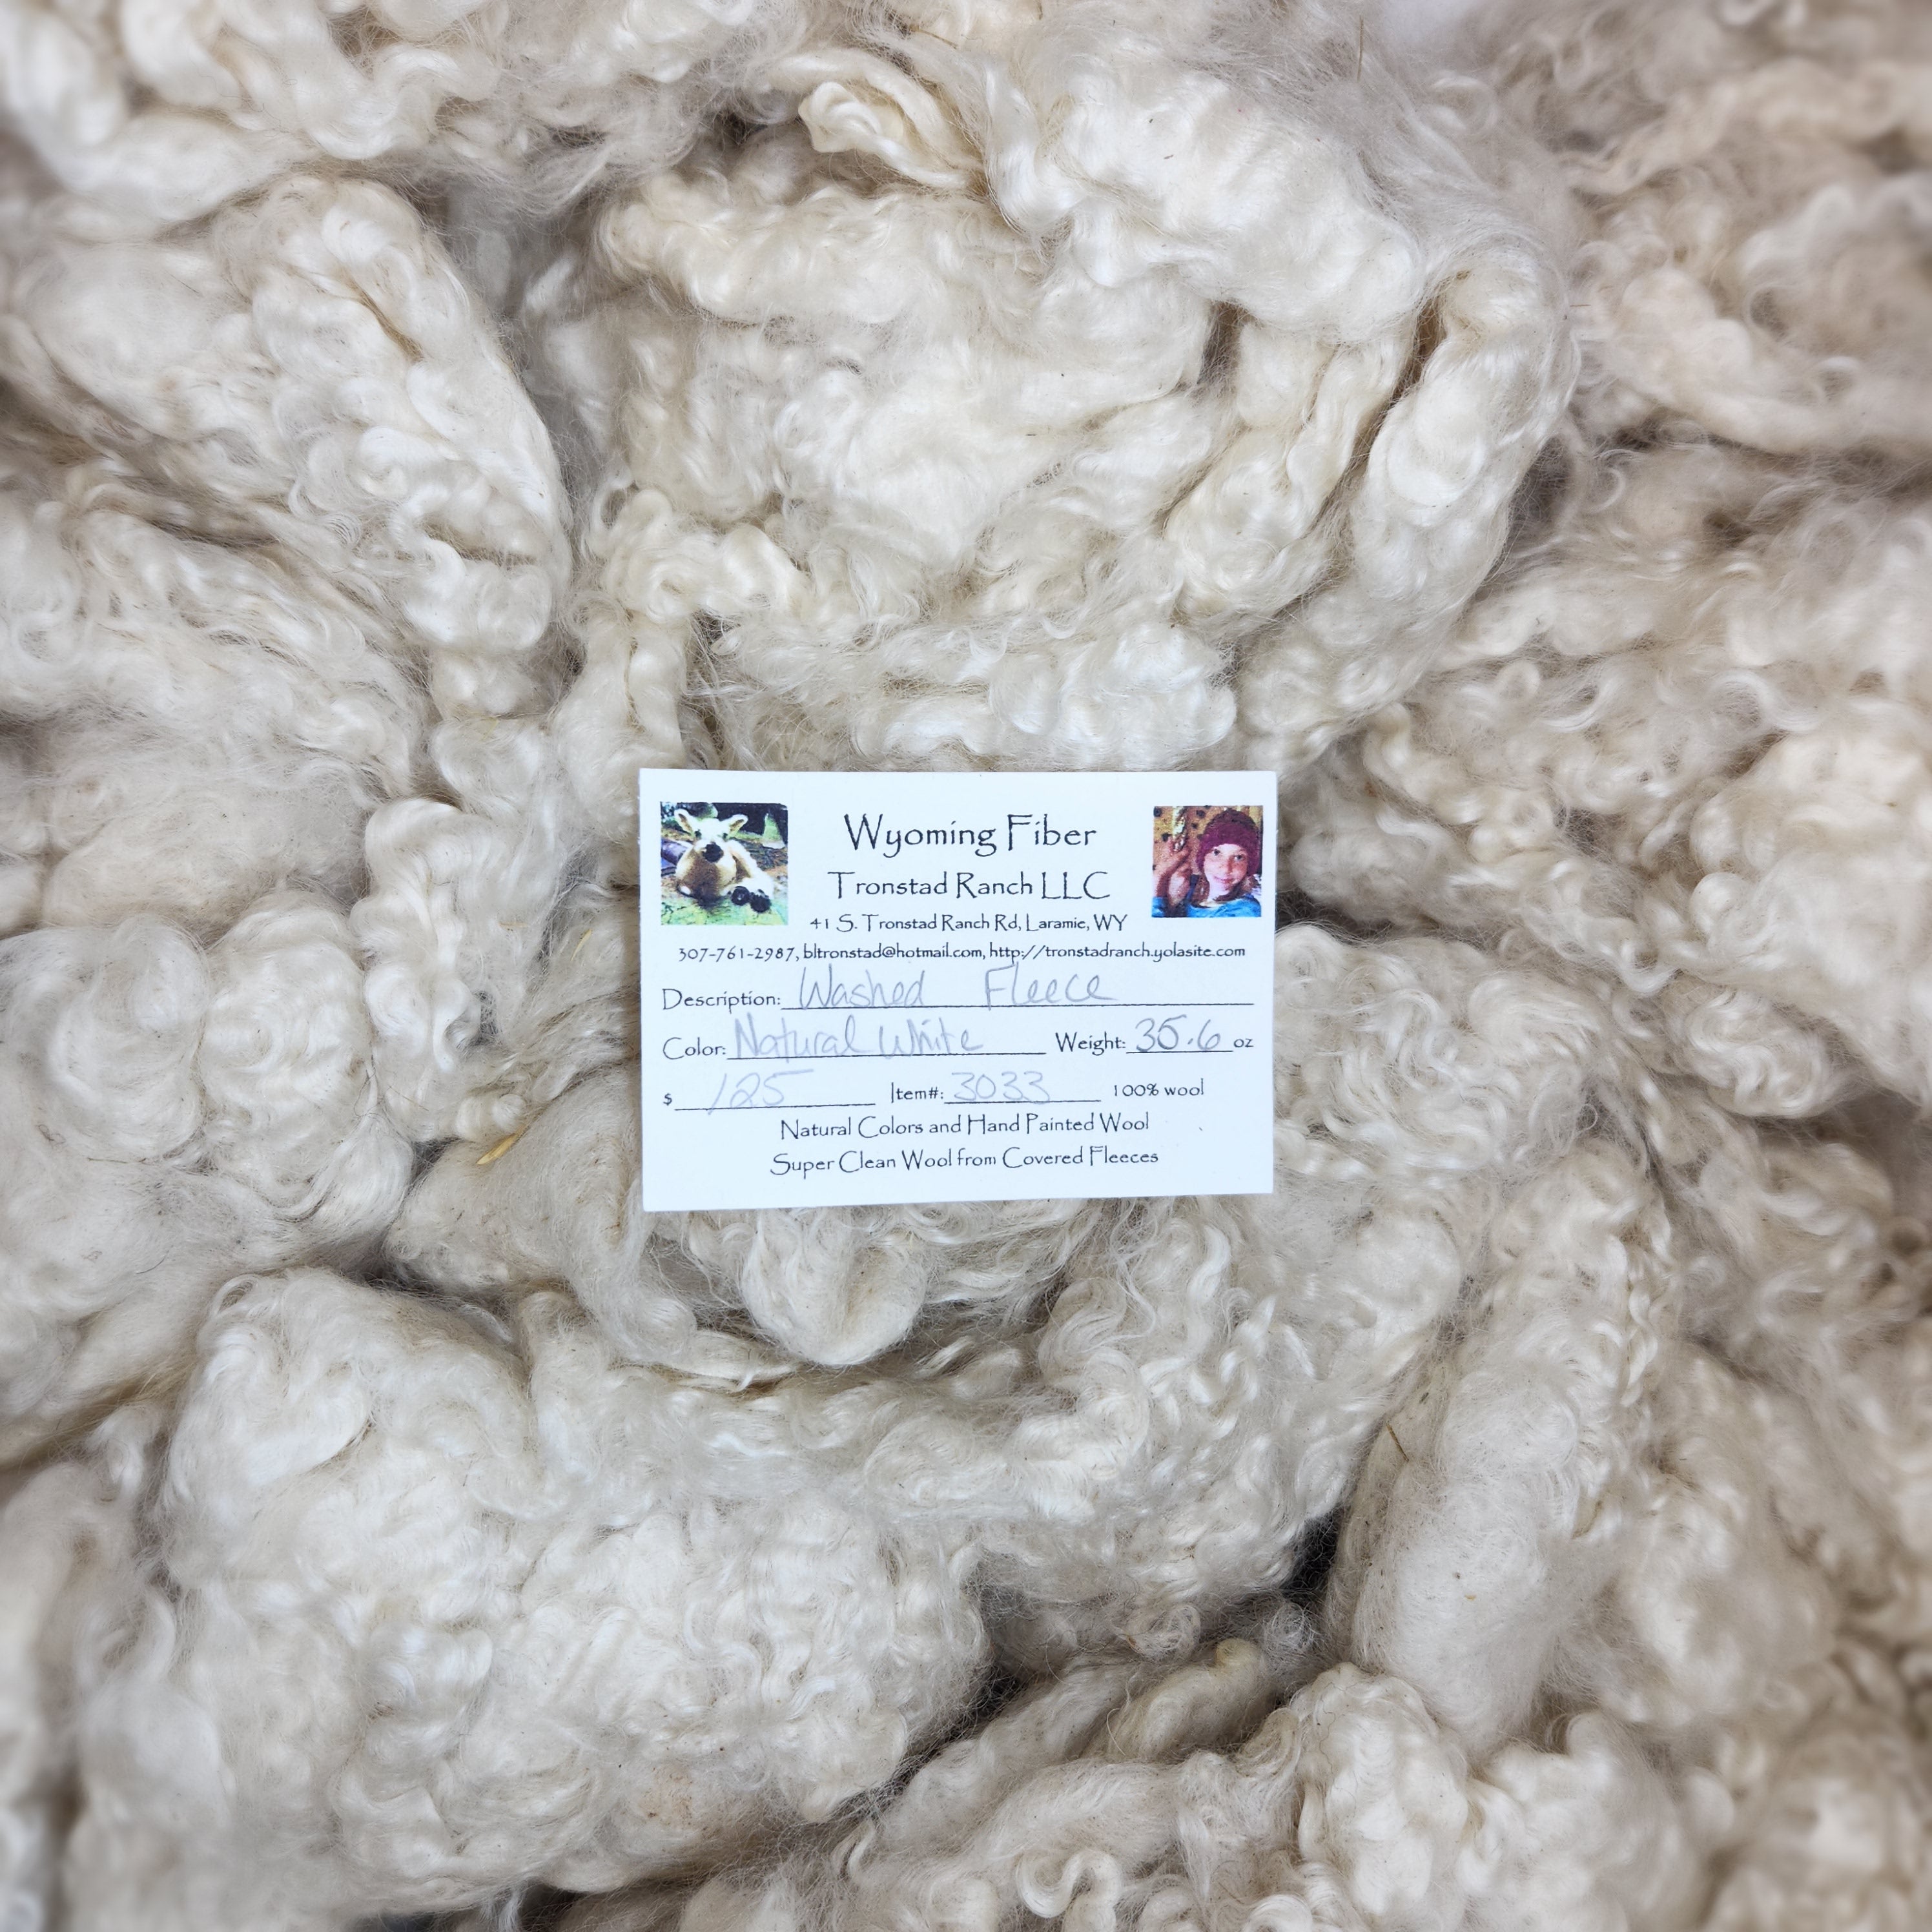 Tronstad Ranch Natural White Fleece from Cousin 35.6 oz